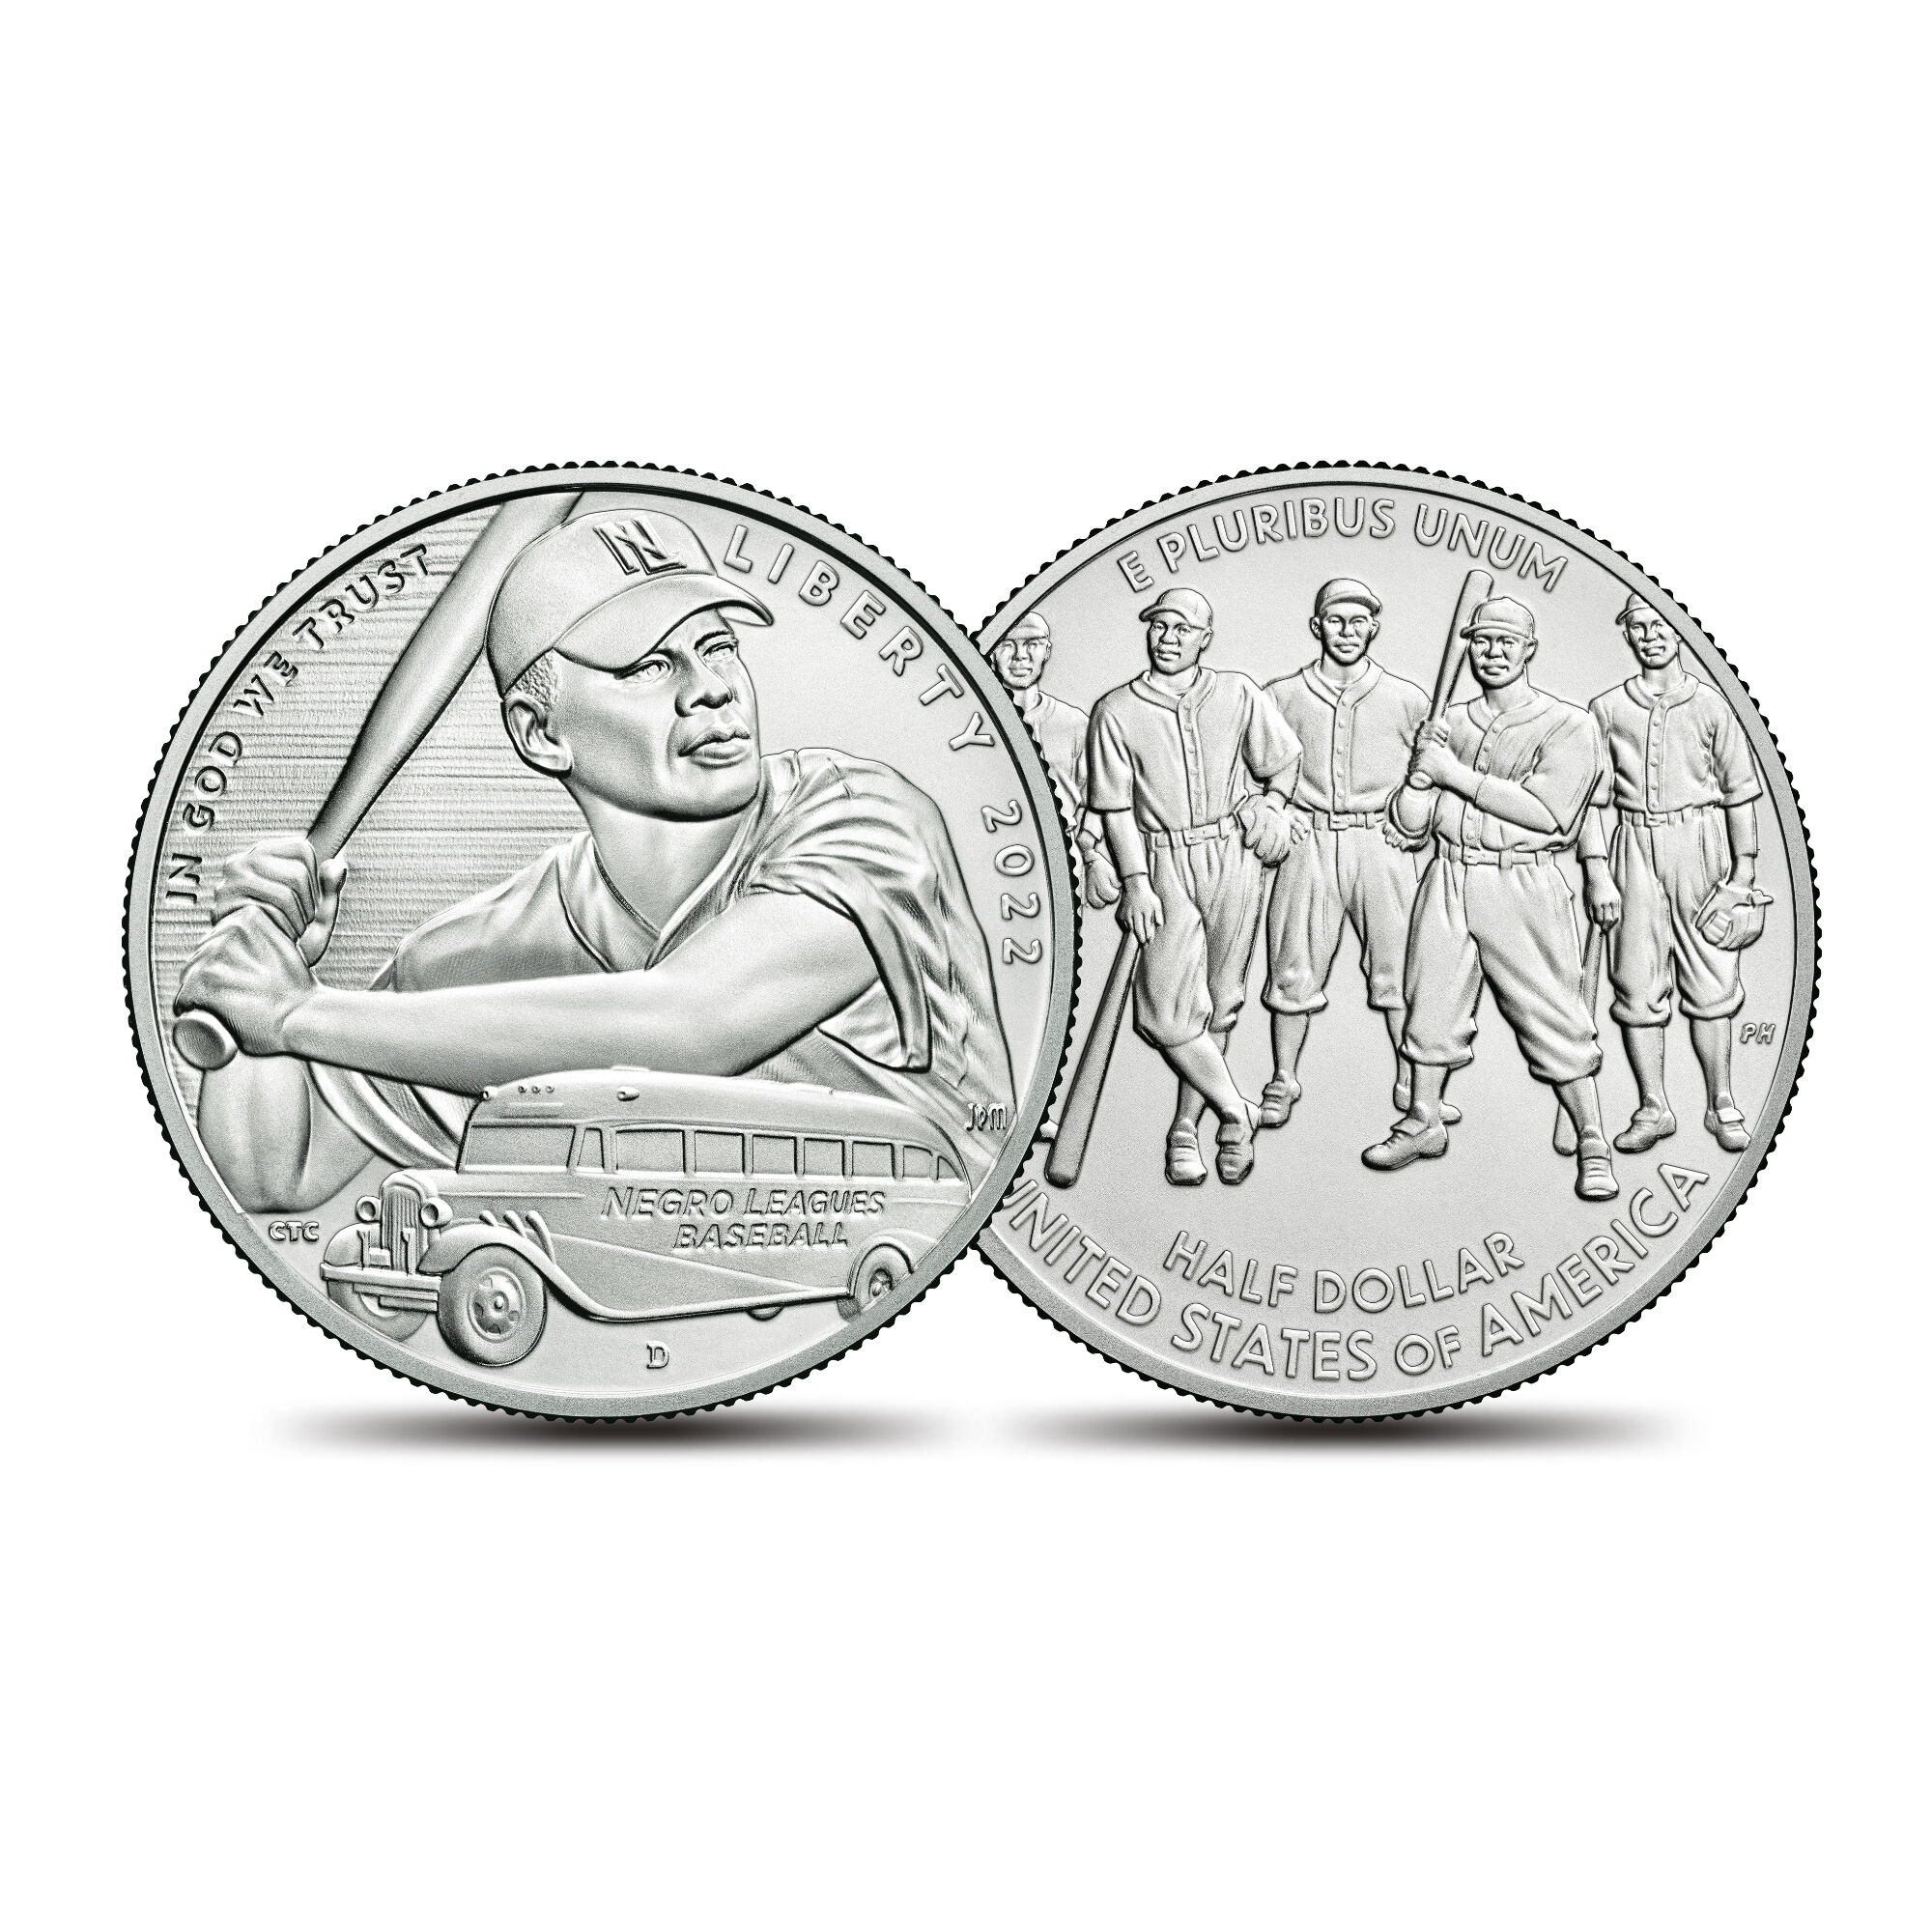 Negro Leagues Baseball Coin Set 10714 0014 b coin